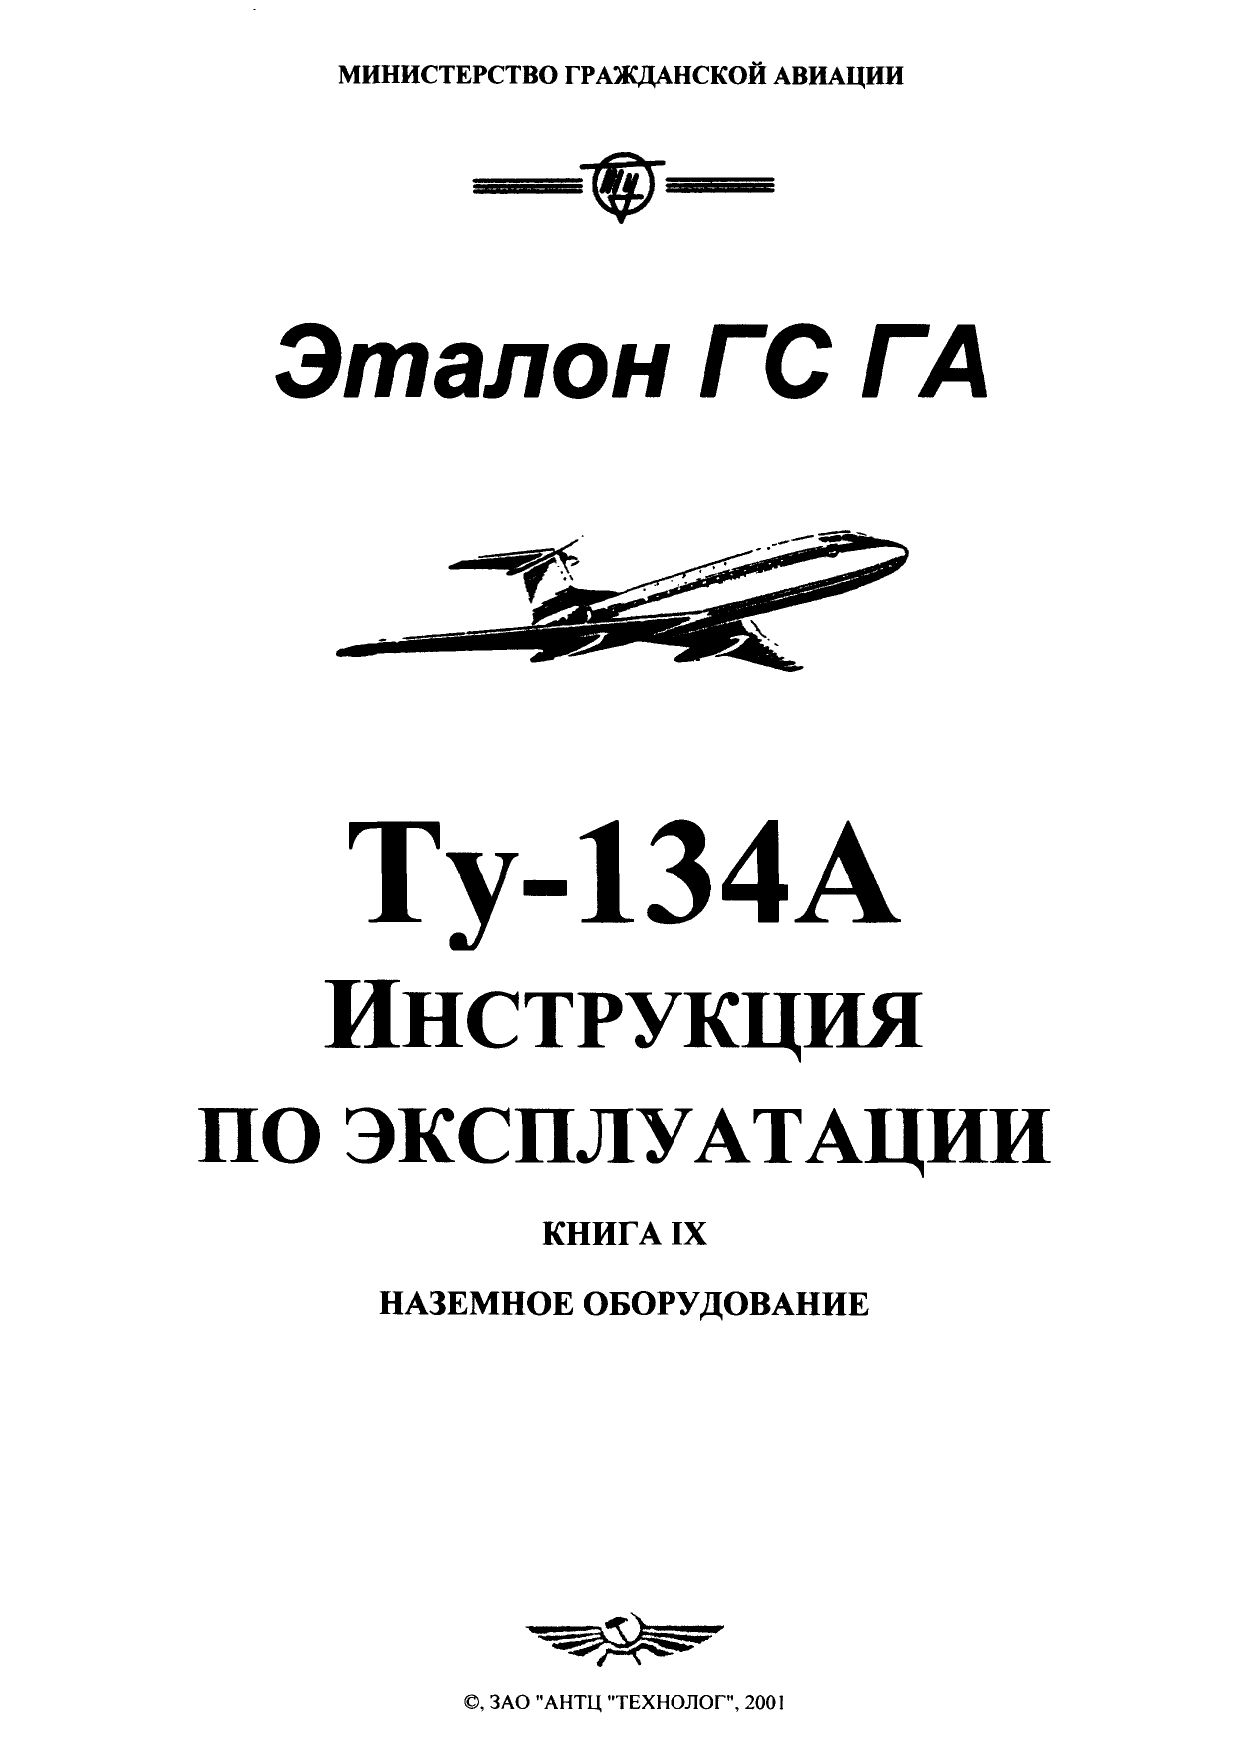 Tu-134_IYE_kn9_001